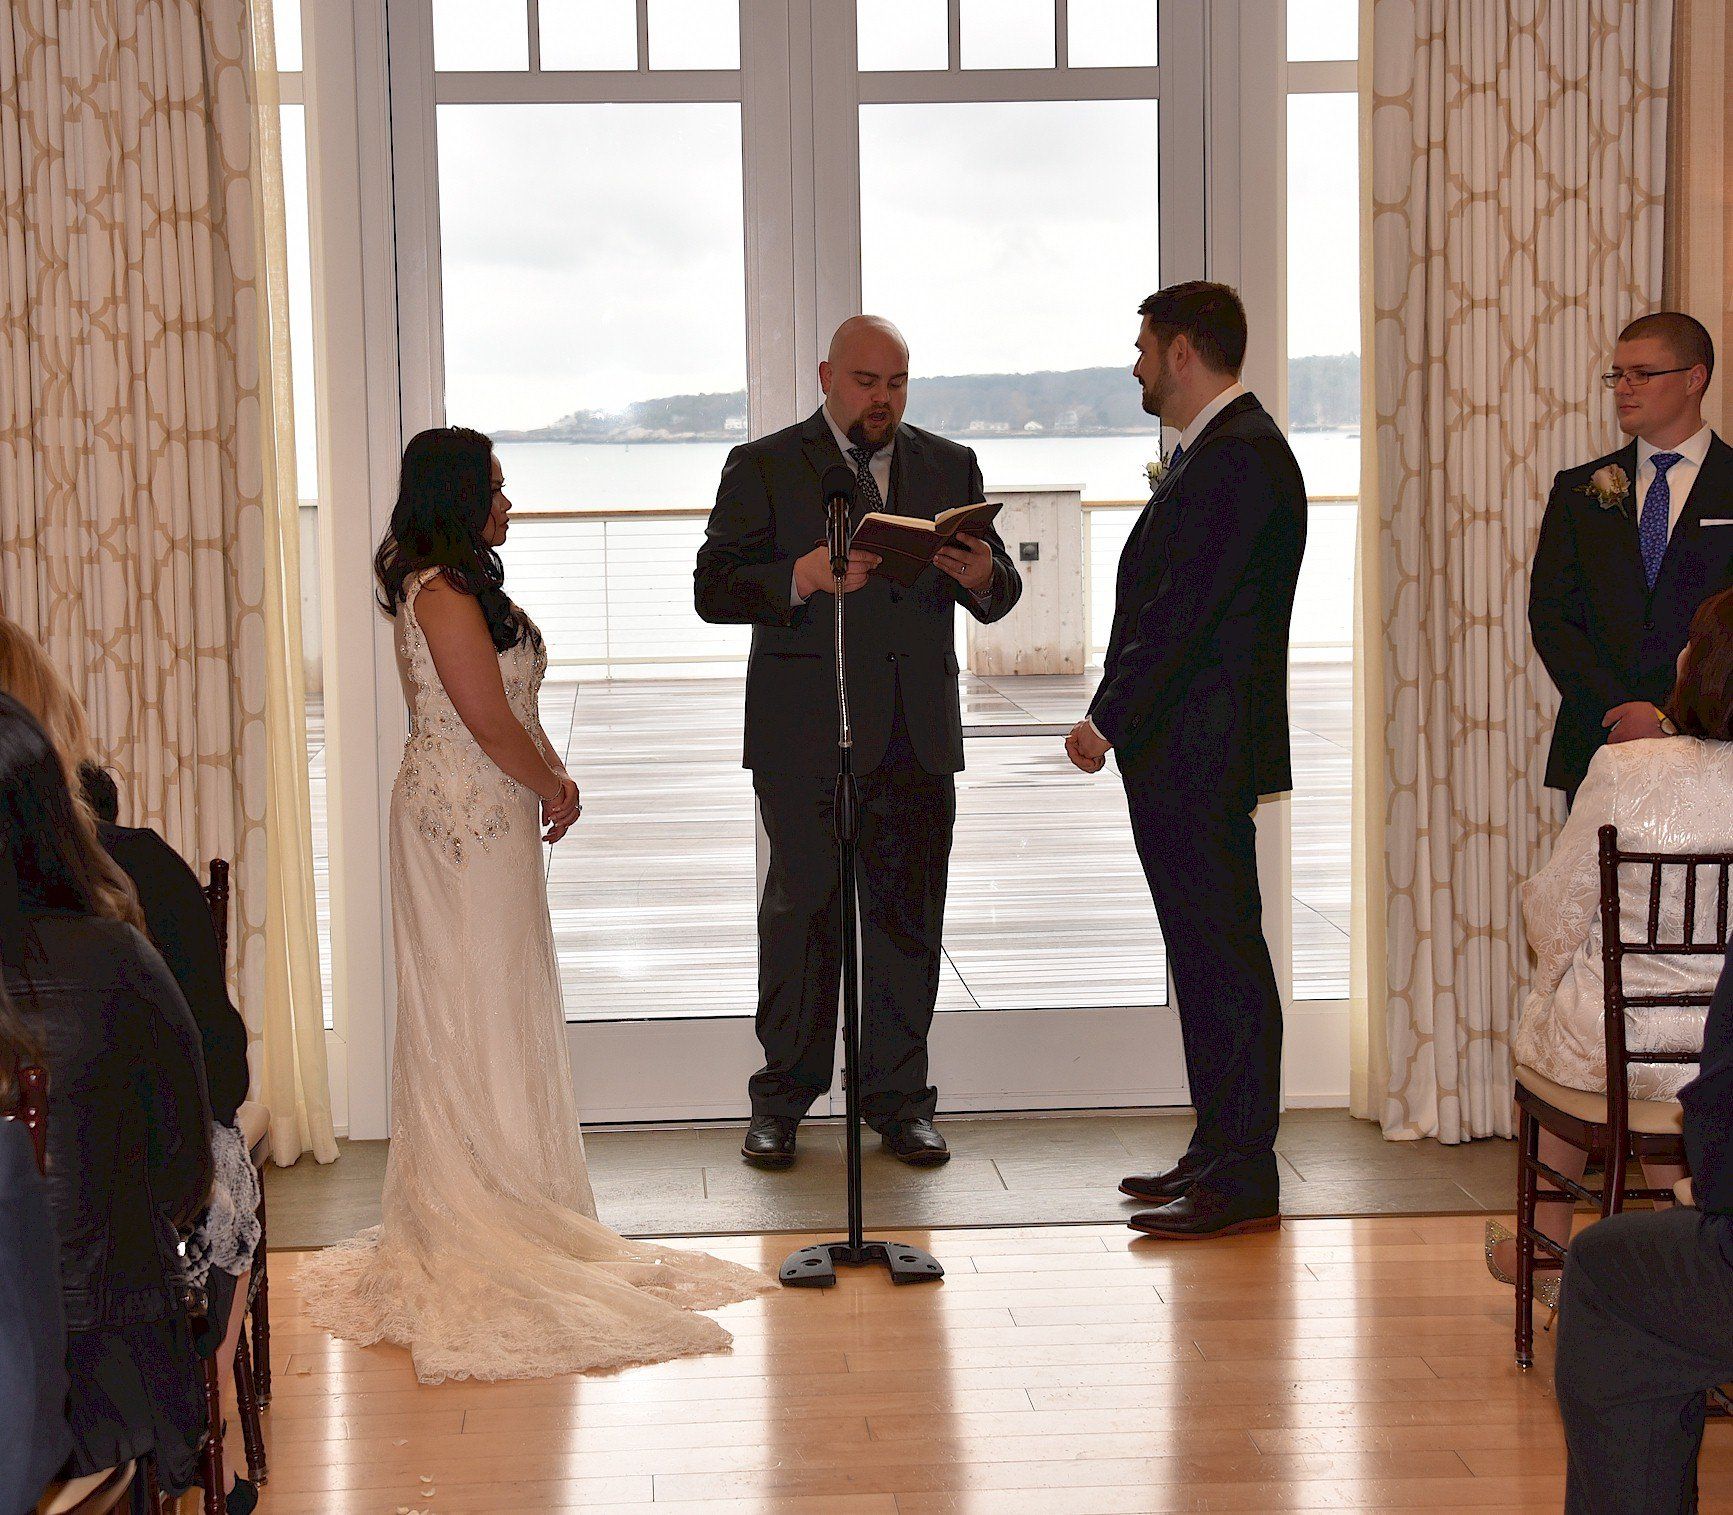 bride and groom Wedding Ceremony MA wedding DJ at Beauport Hotel, Gloucester, Massachusetts